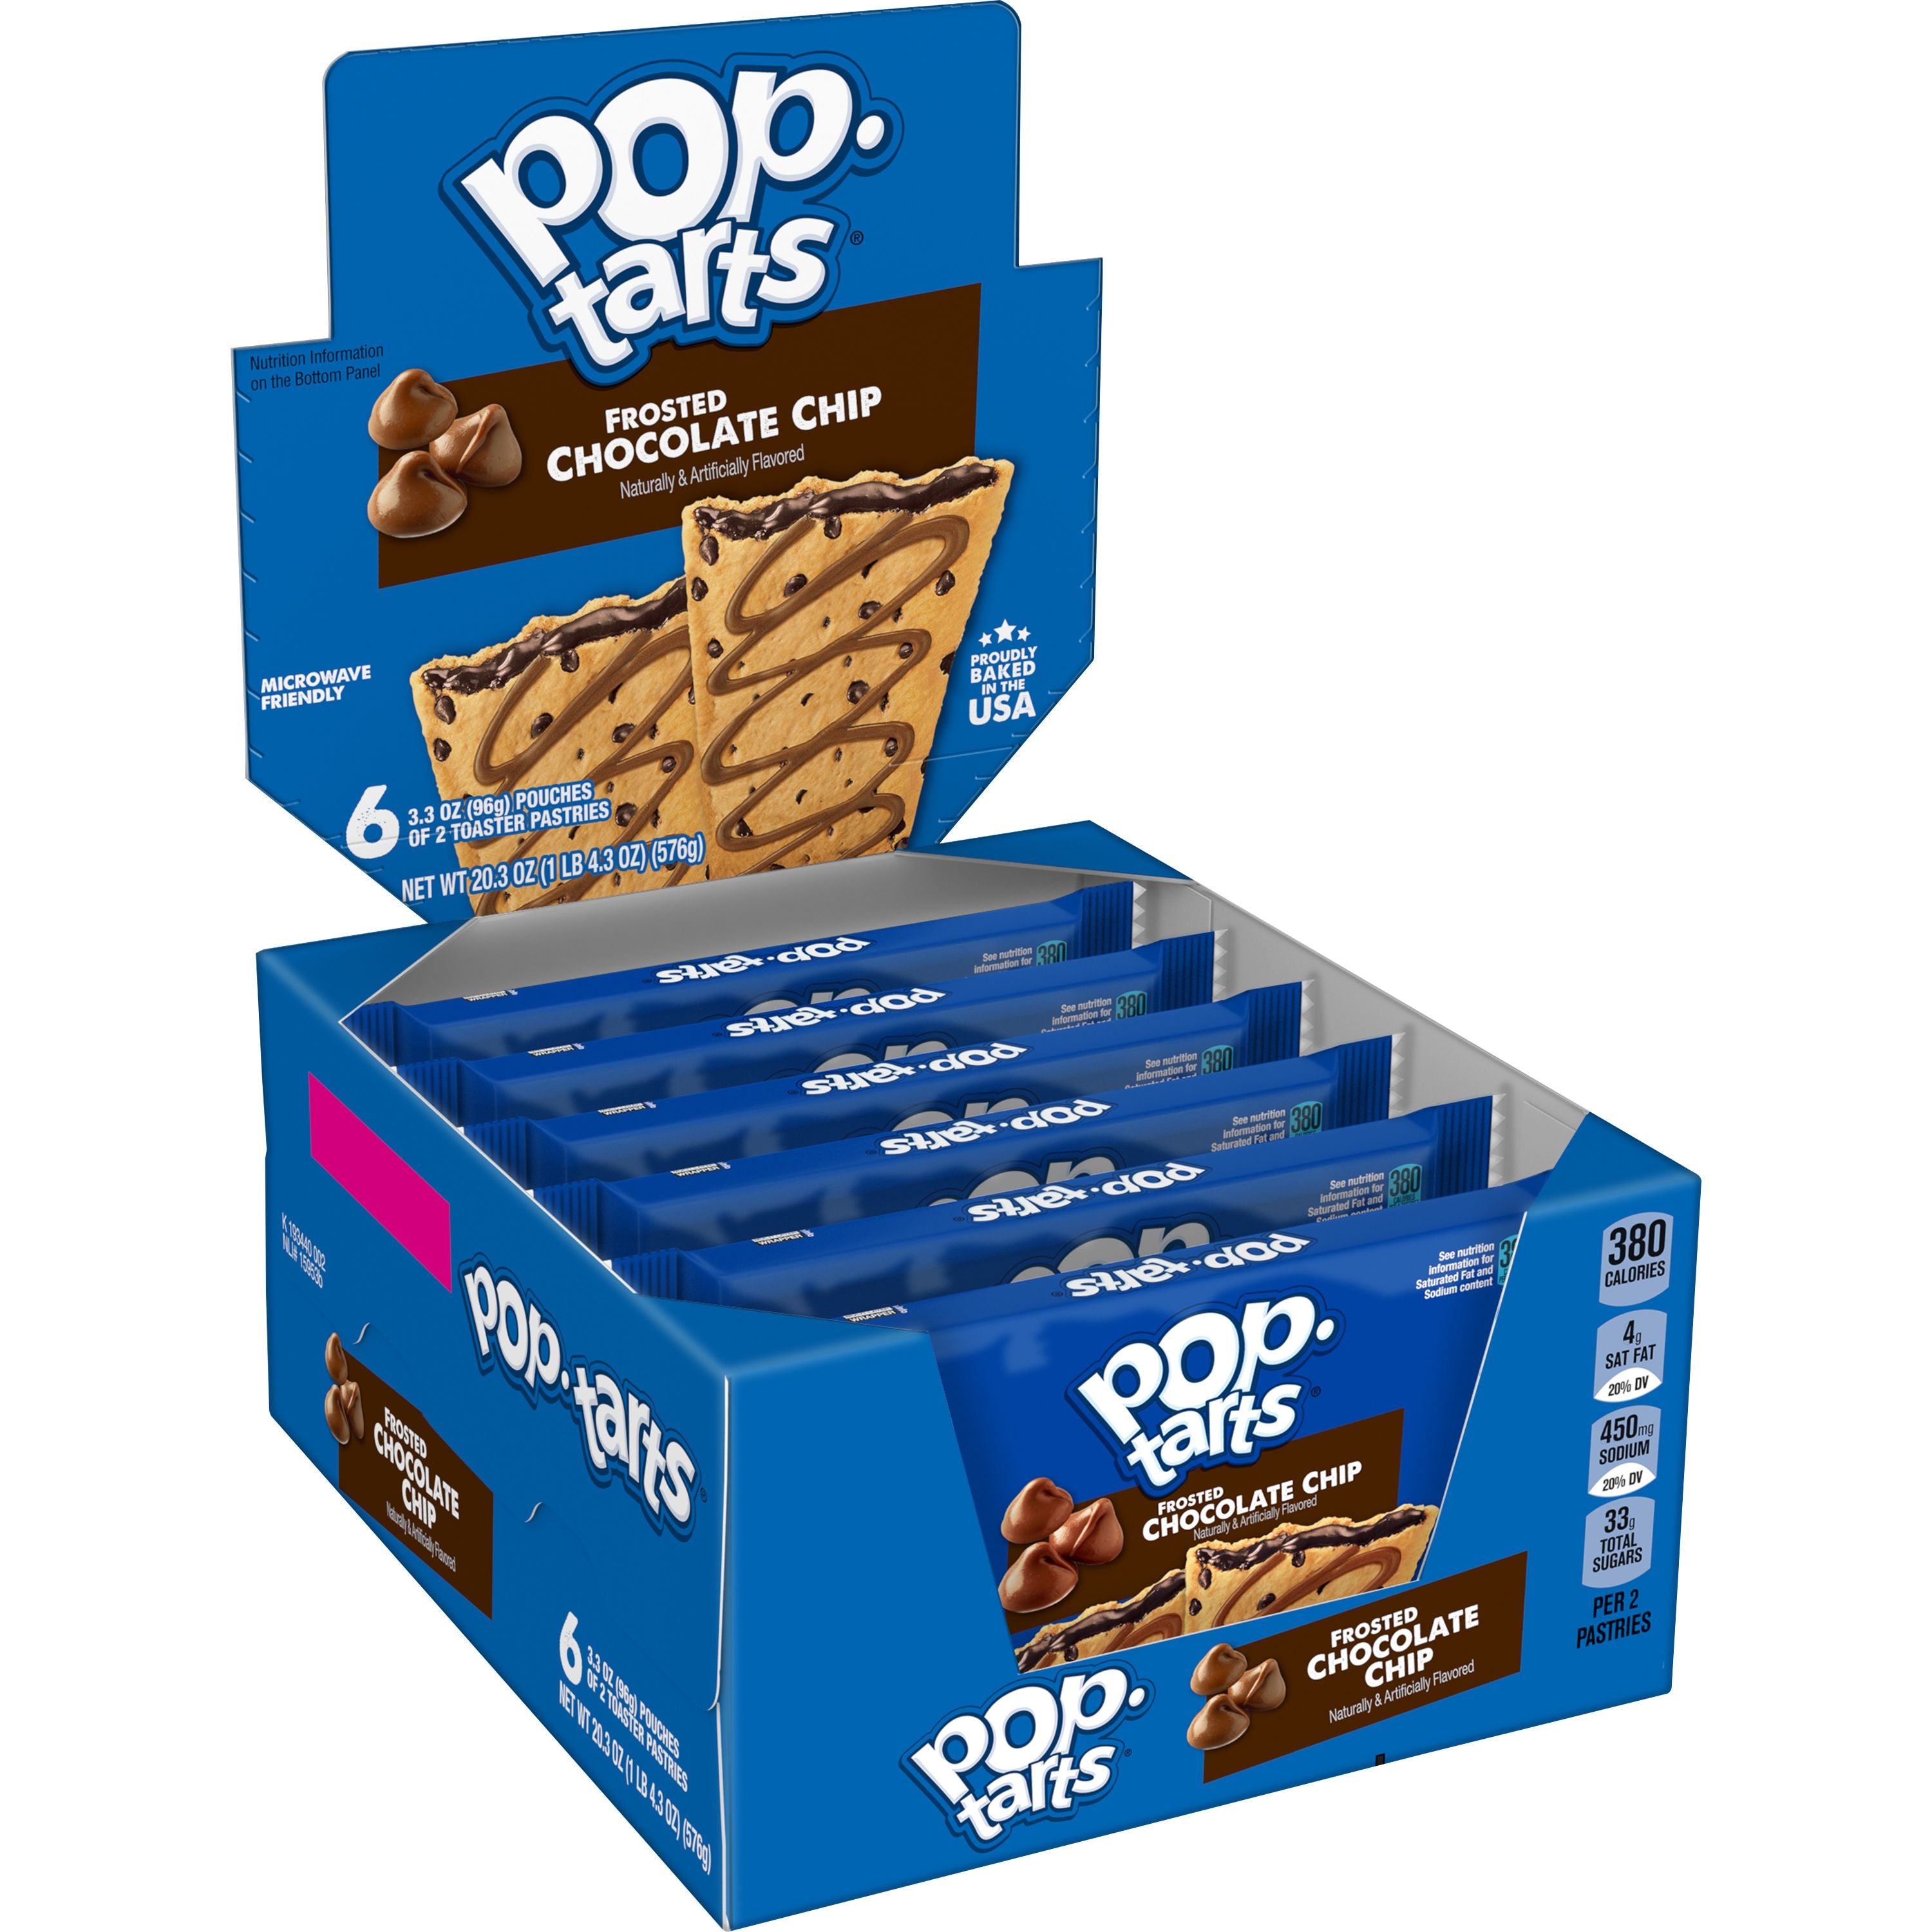 Buy Pop Tarts kellogg's Brown Sugar Cinnamon - Pop's America